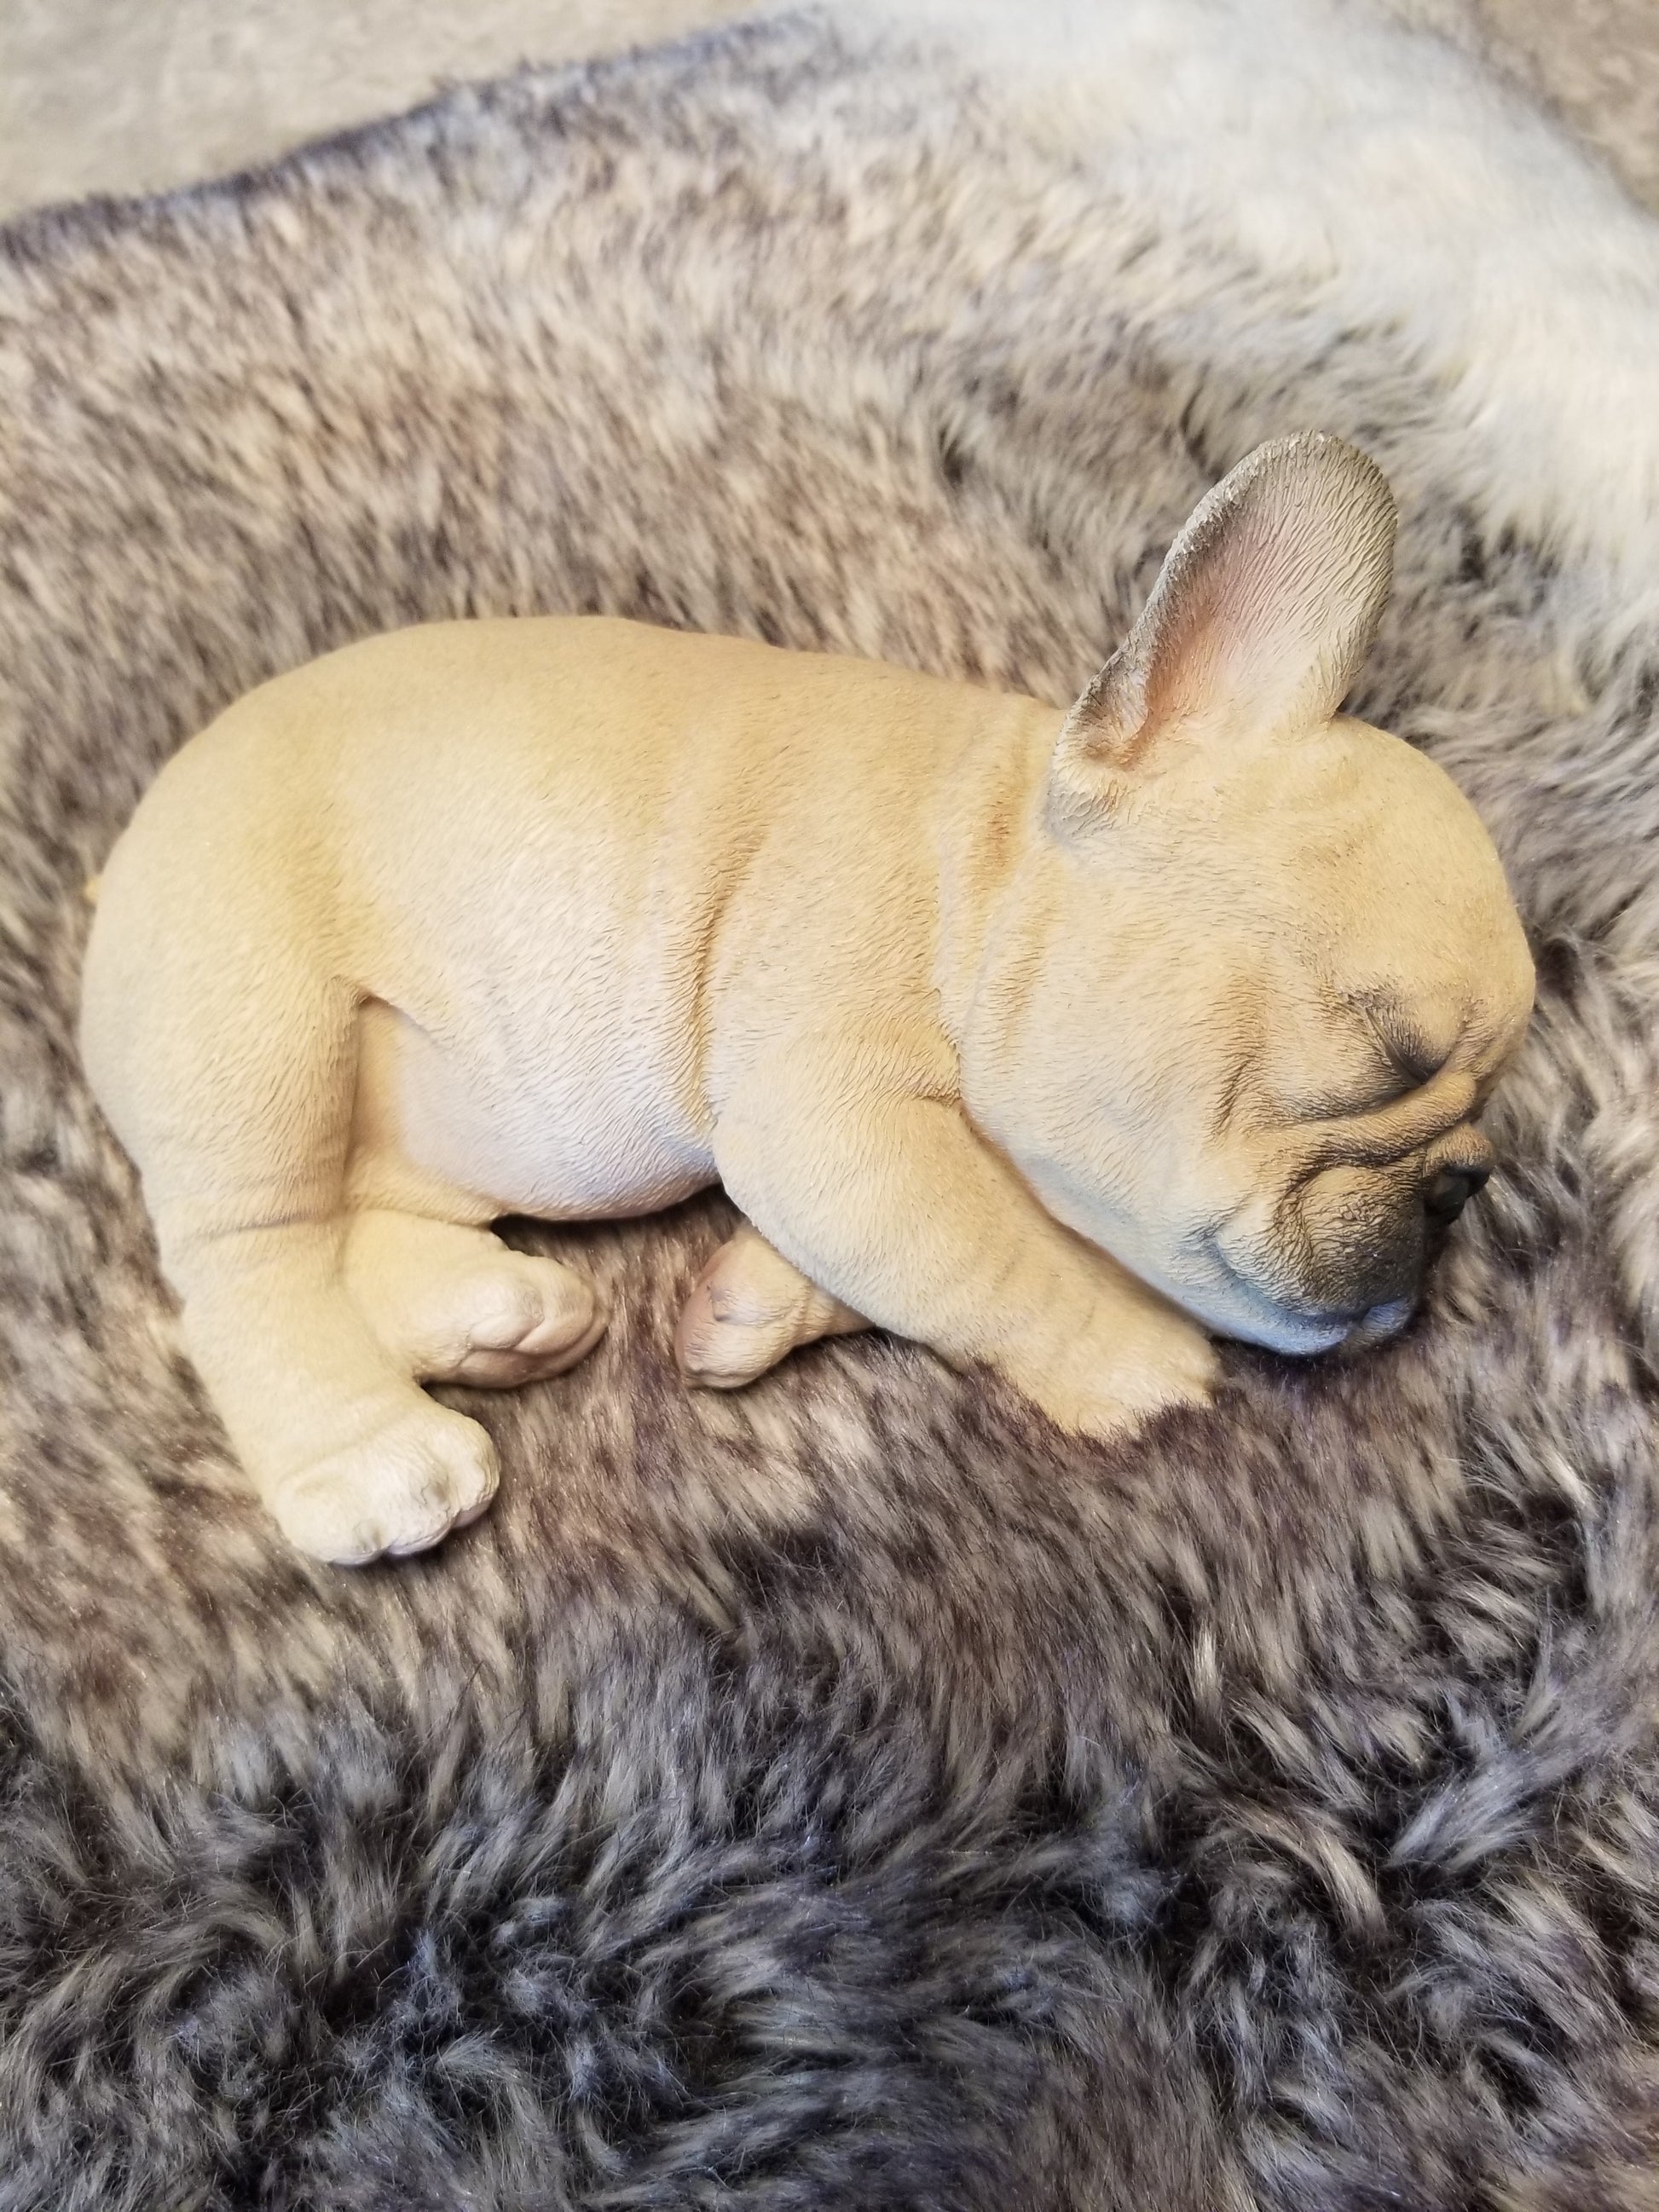 buy a sleeping bulldog statue at auction